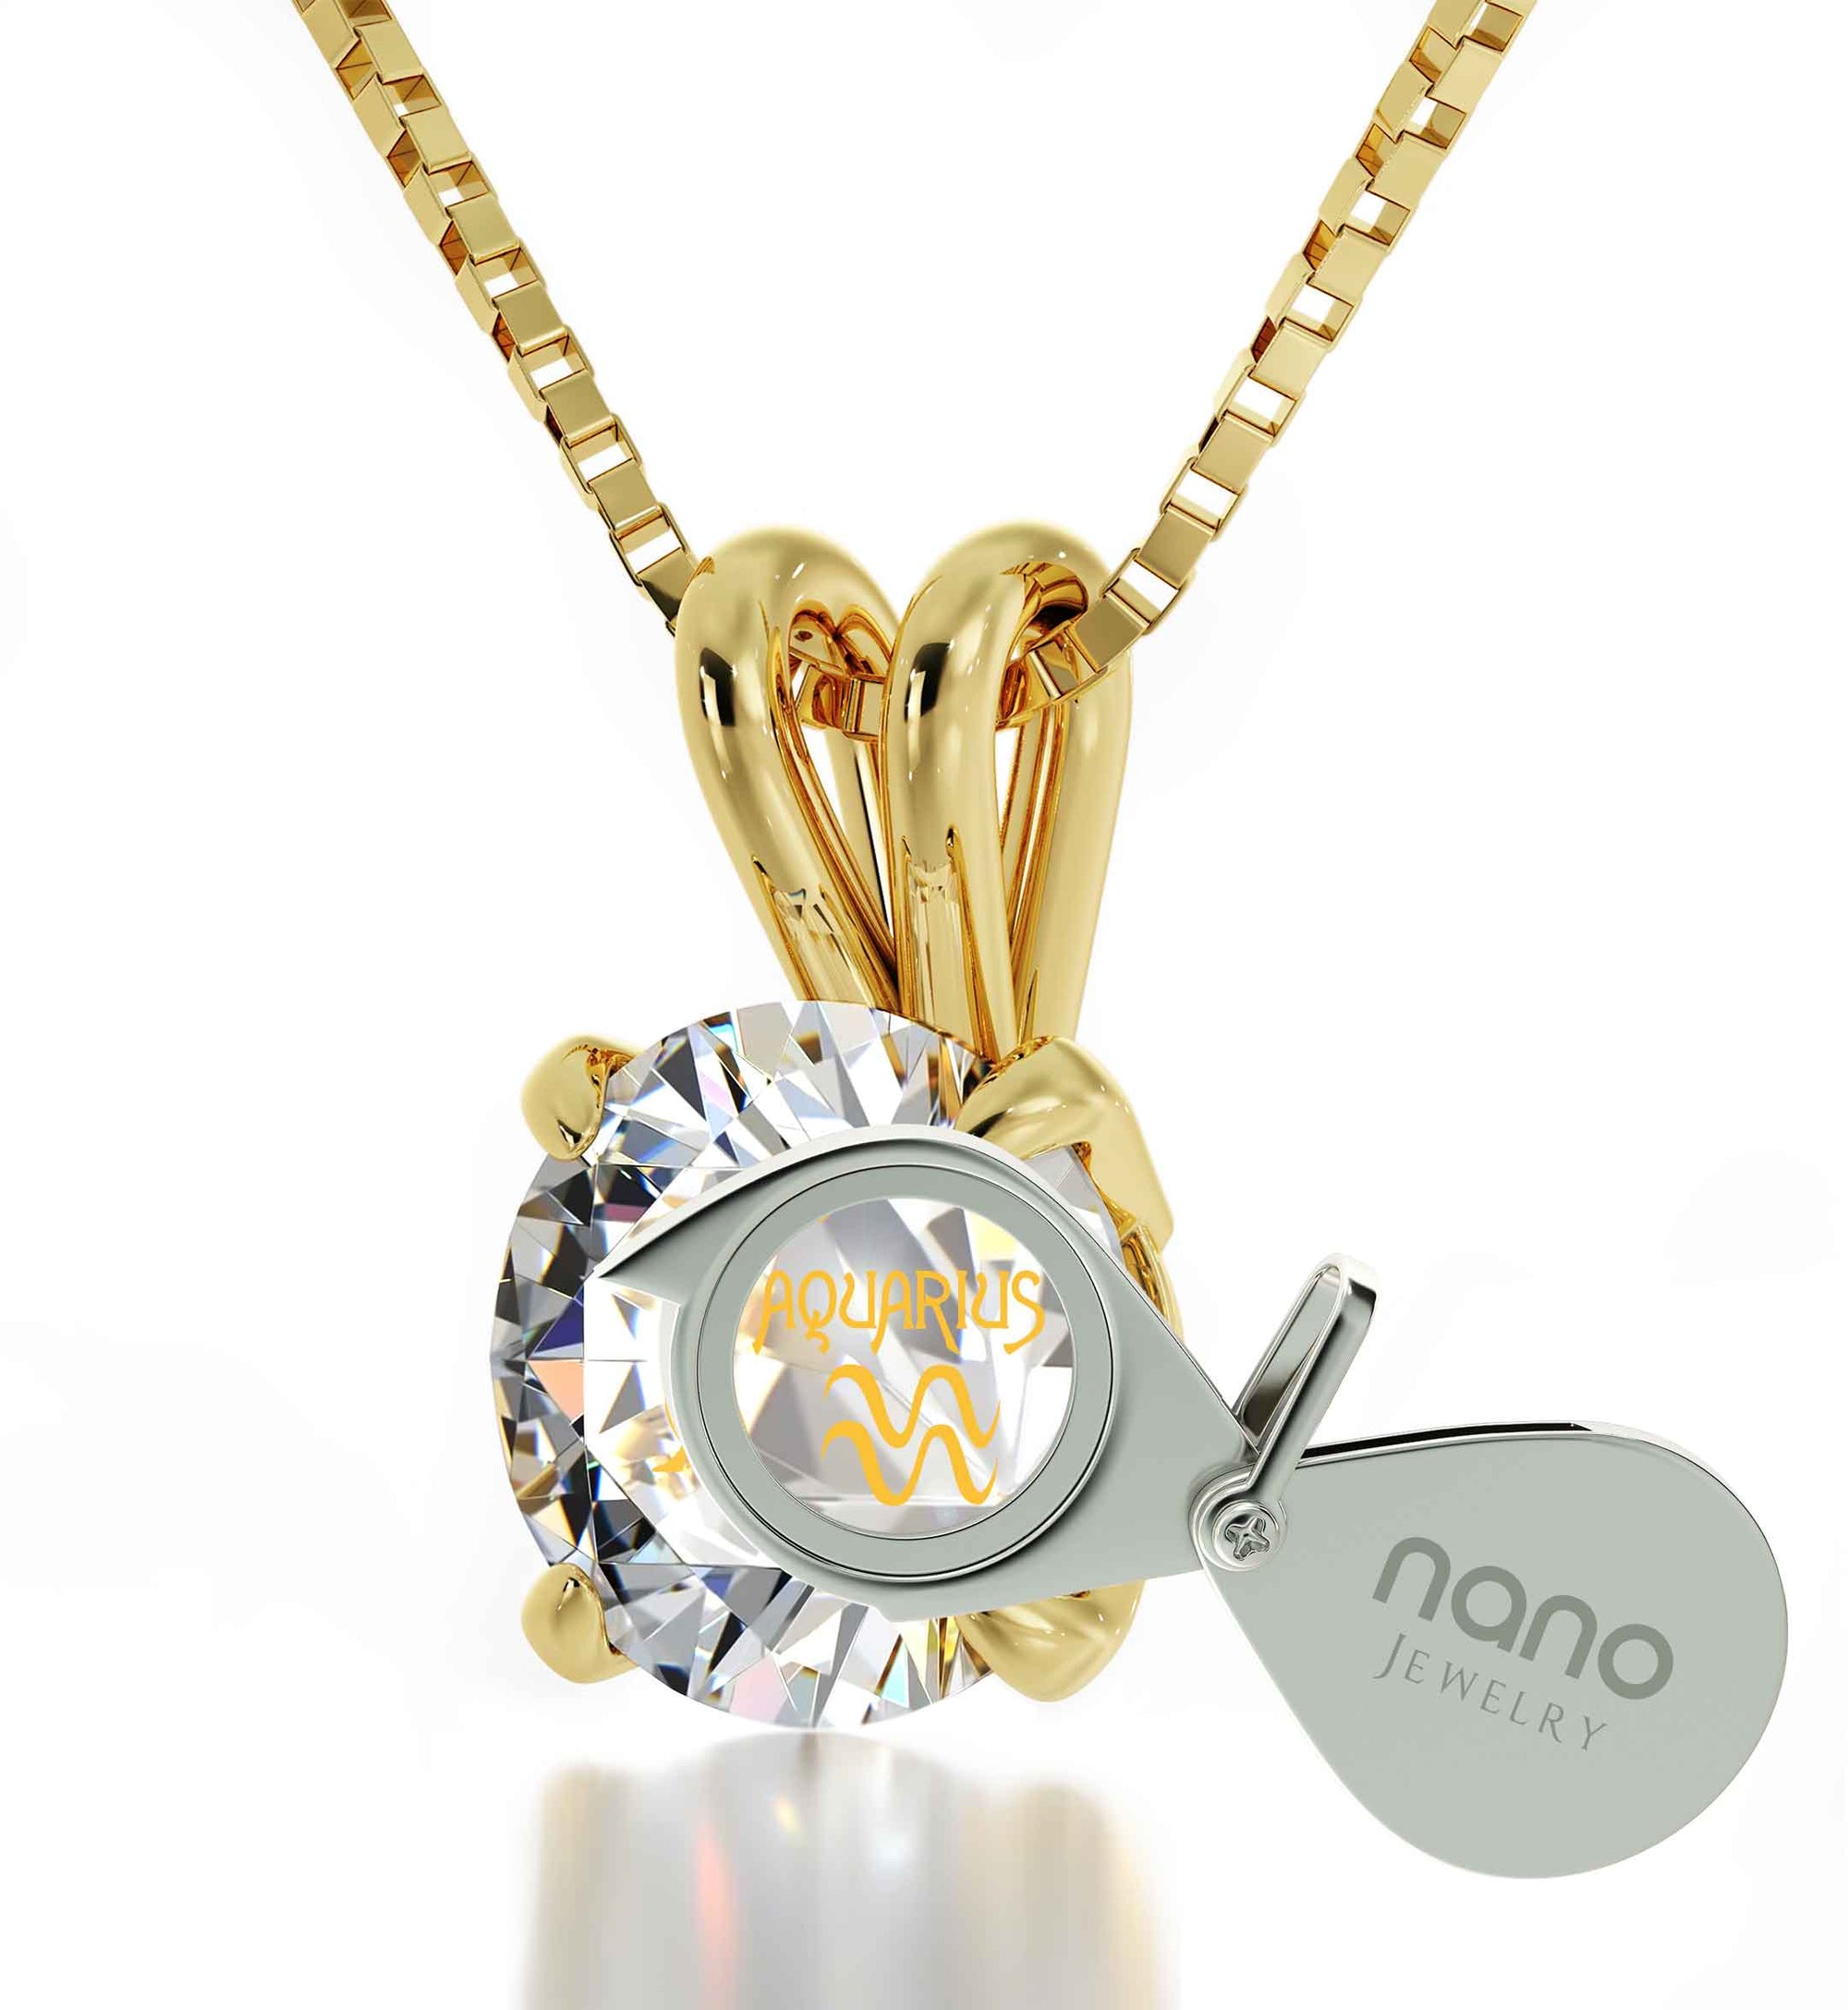 Aquarius with Jewelry Zodiac 14k Jewelry Necklace NanoStyle Classic Gold Difference a - |